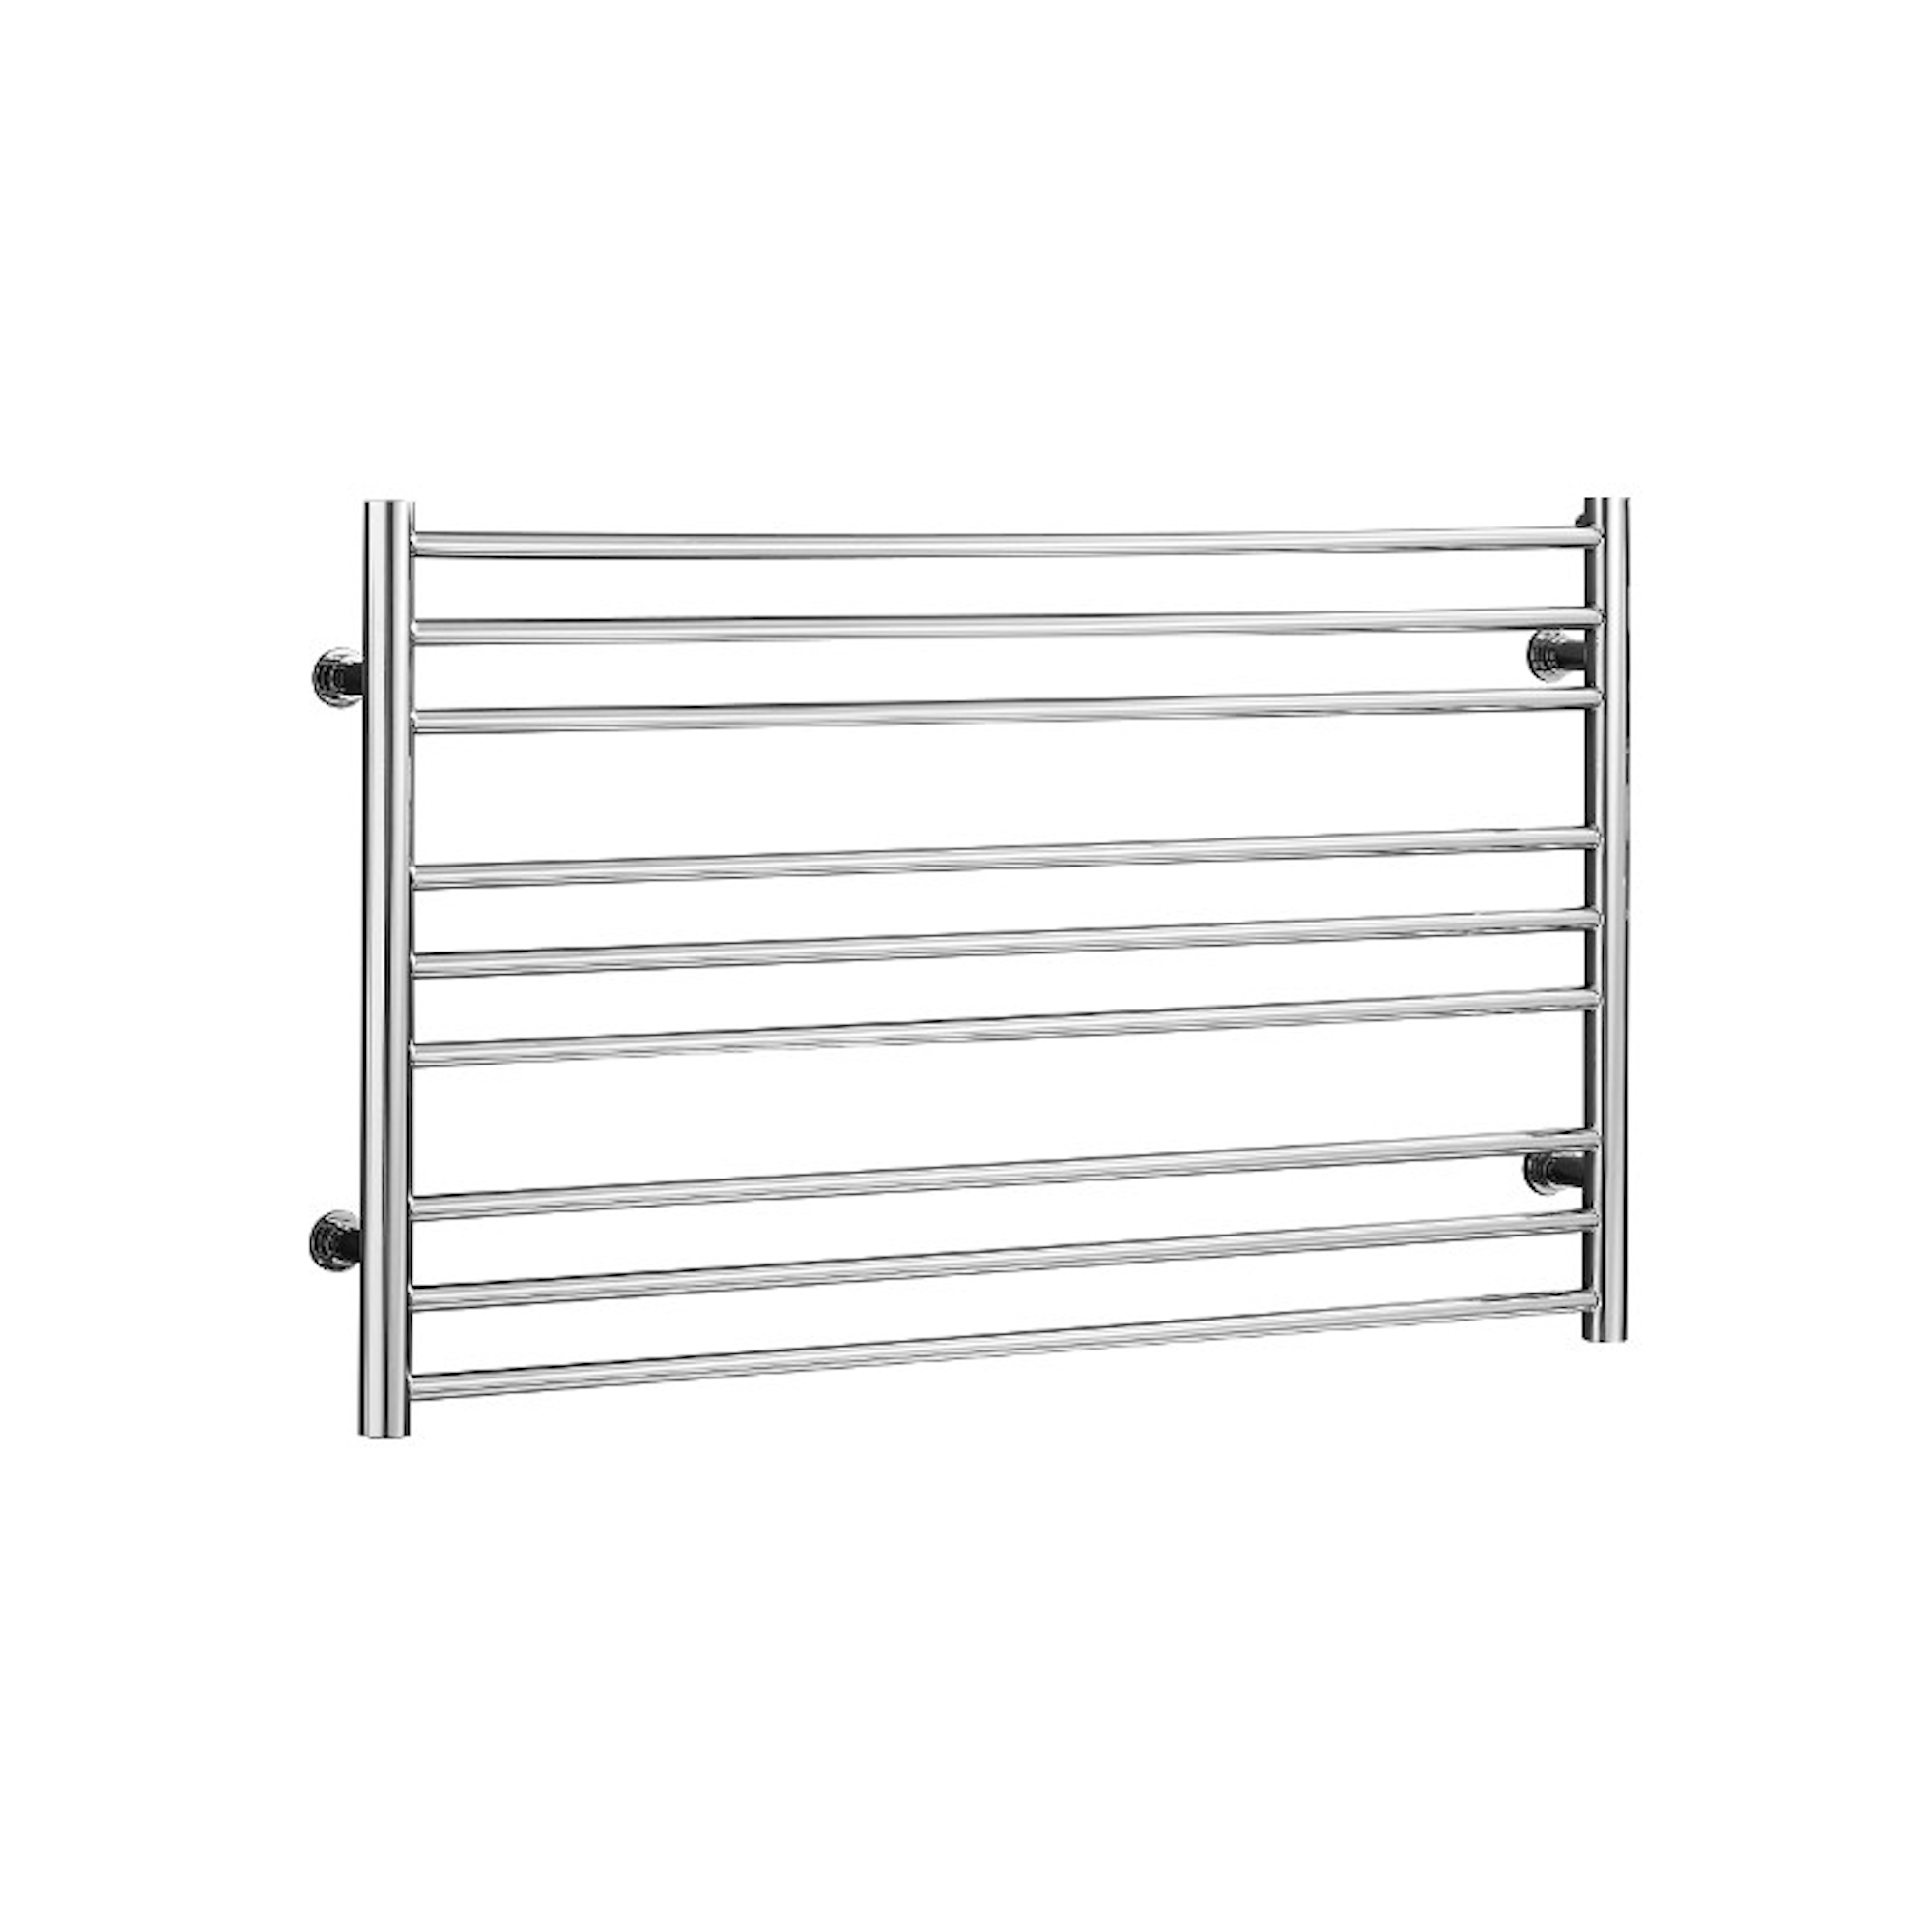 TEMPUS 600 X 1000 stainless steel towel rail